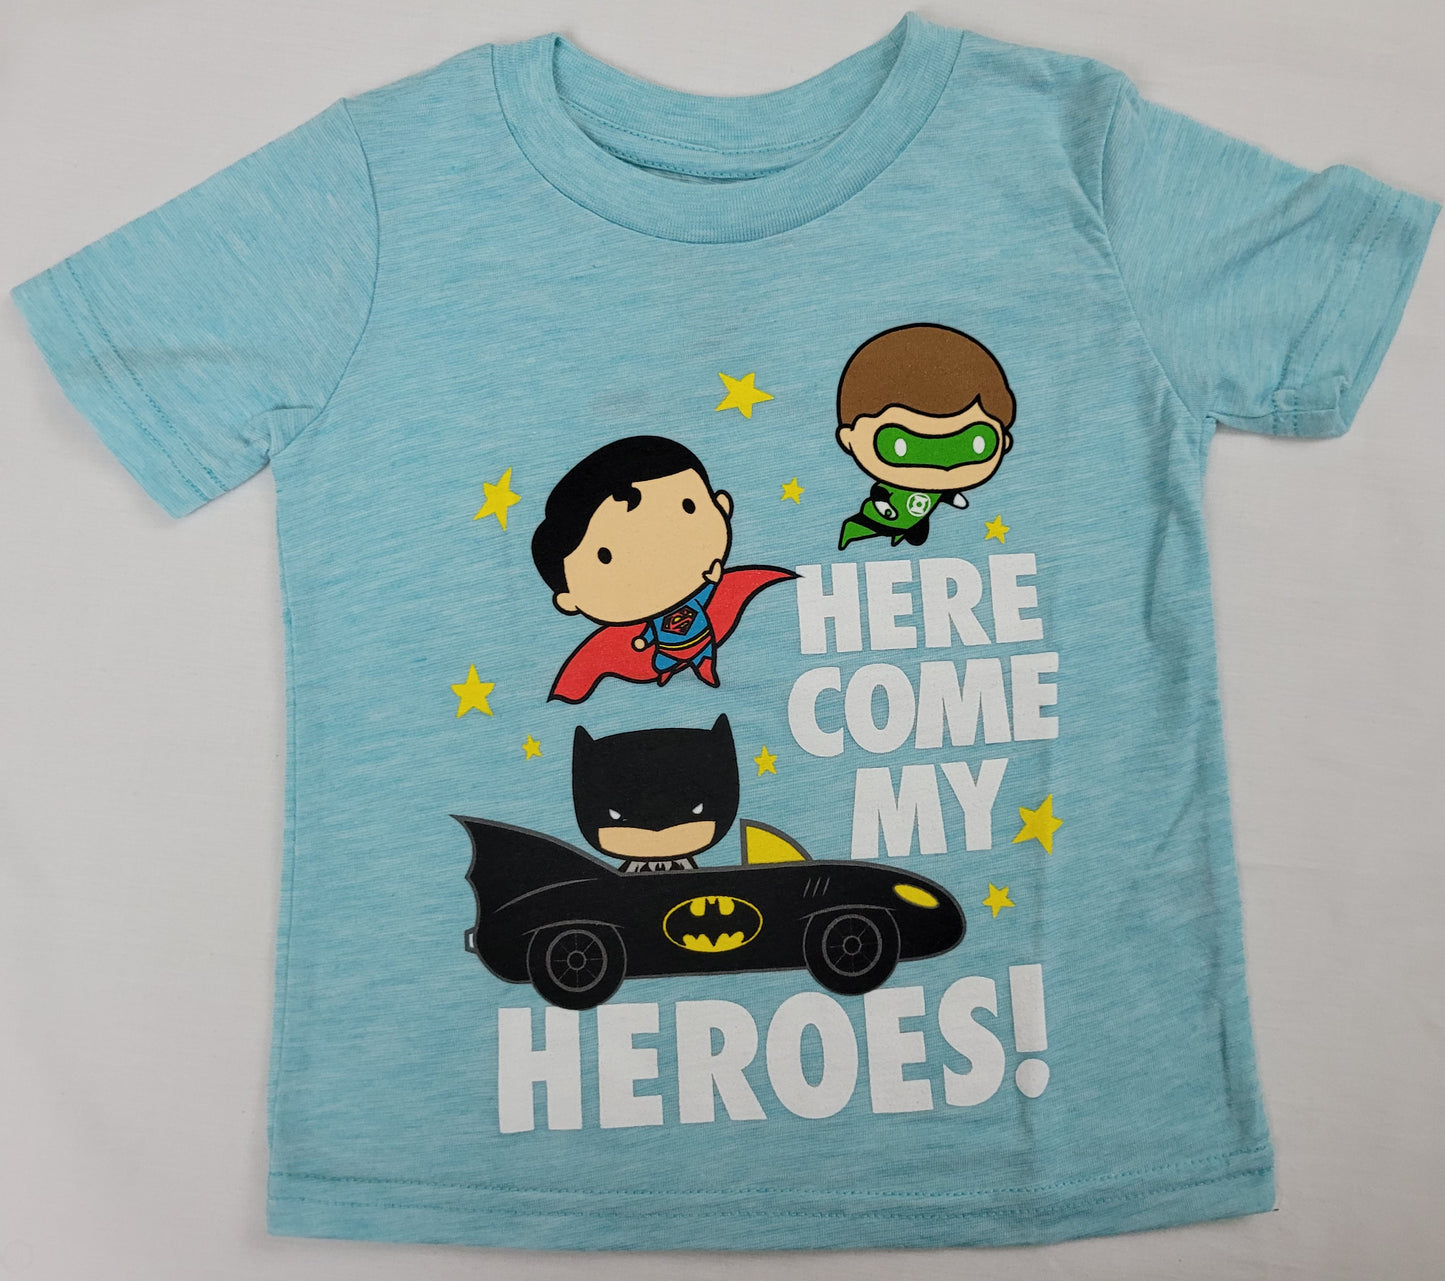 Green Lantern Superman Batman Here Come My Heres Boys T-Shirt 2T 5T